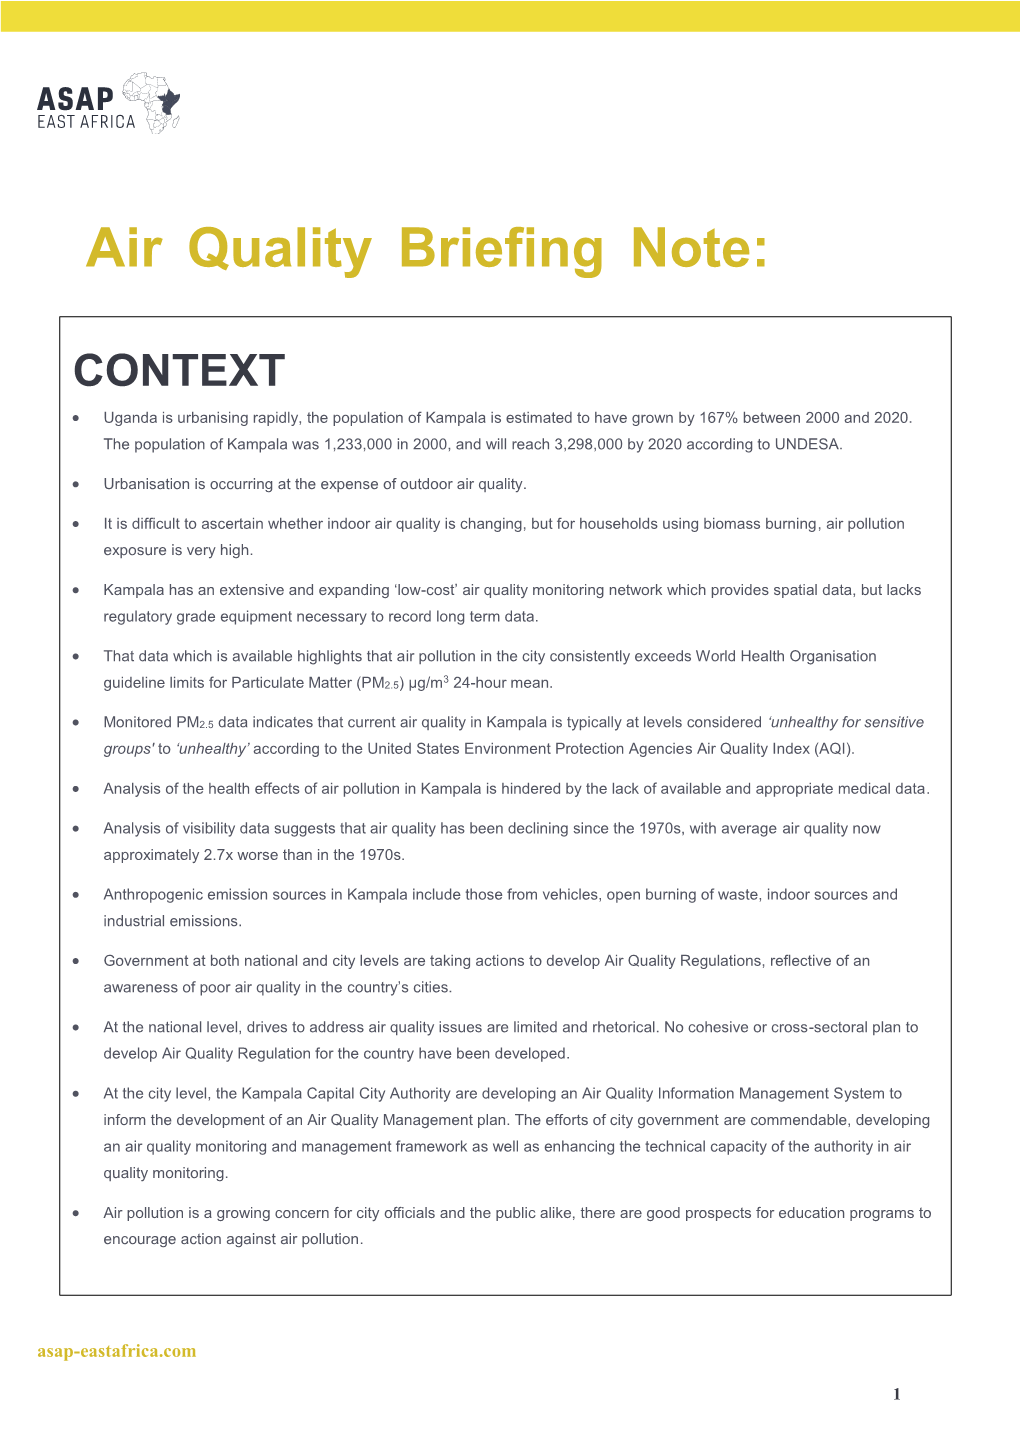 Air Quality Briefing Note: Kampala